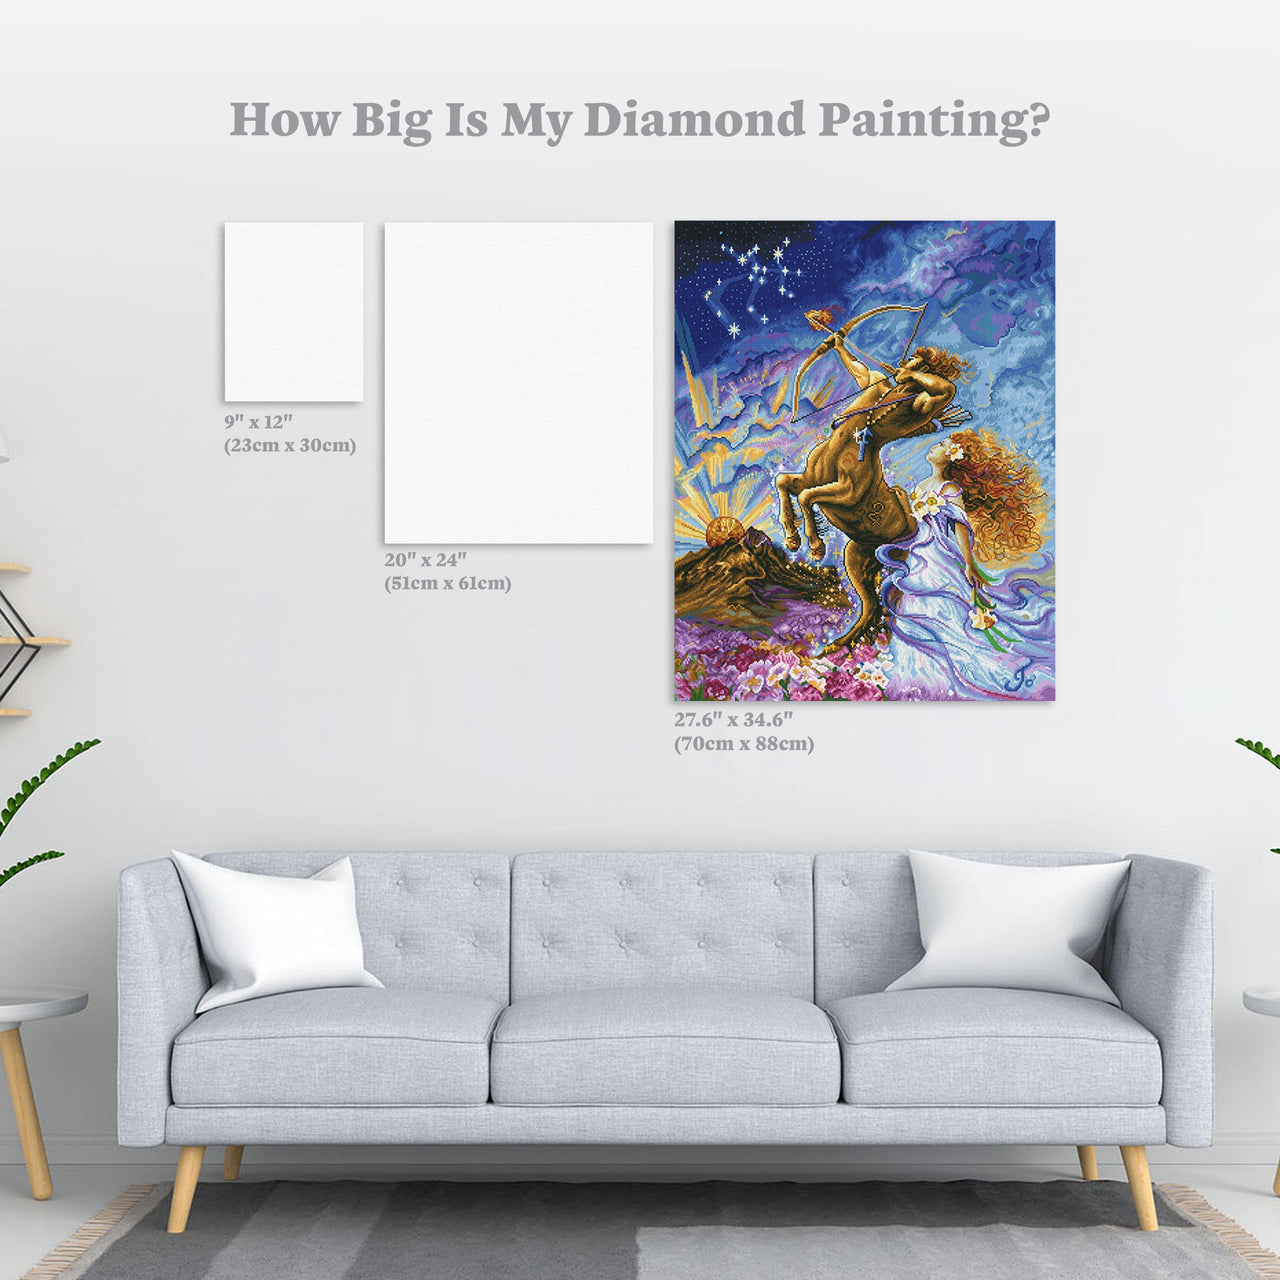 Diamond Painting Sagittarius 27.6" x 34.6″ (70cm x 88cm) / Square with 61 Colors including 2 ABs / 96,664